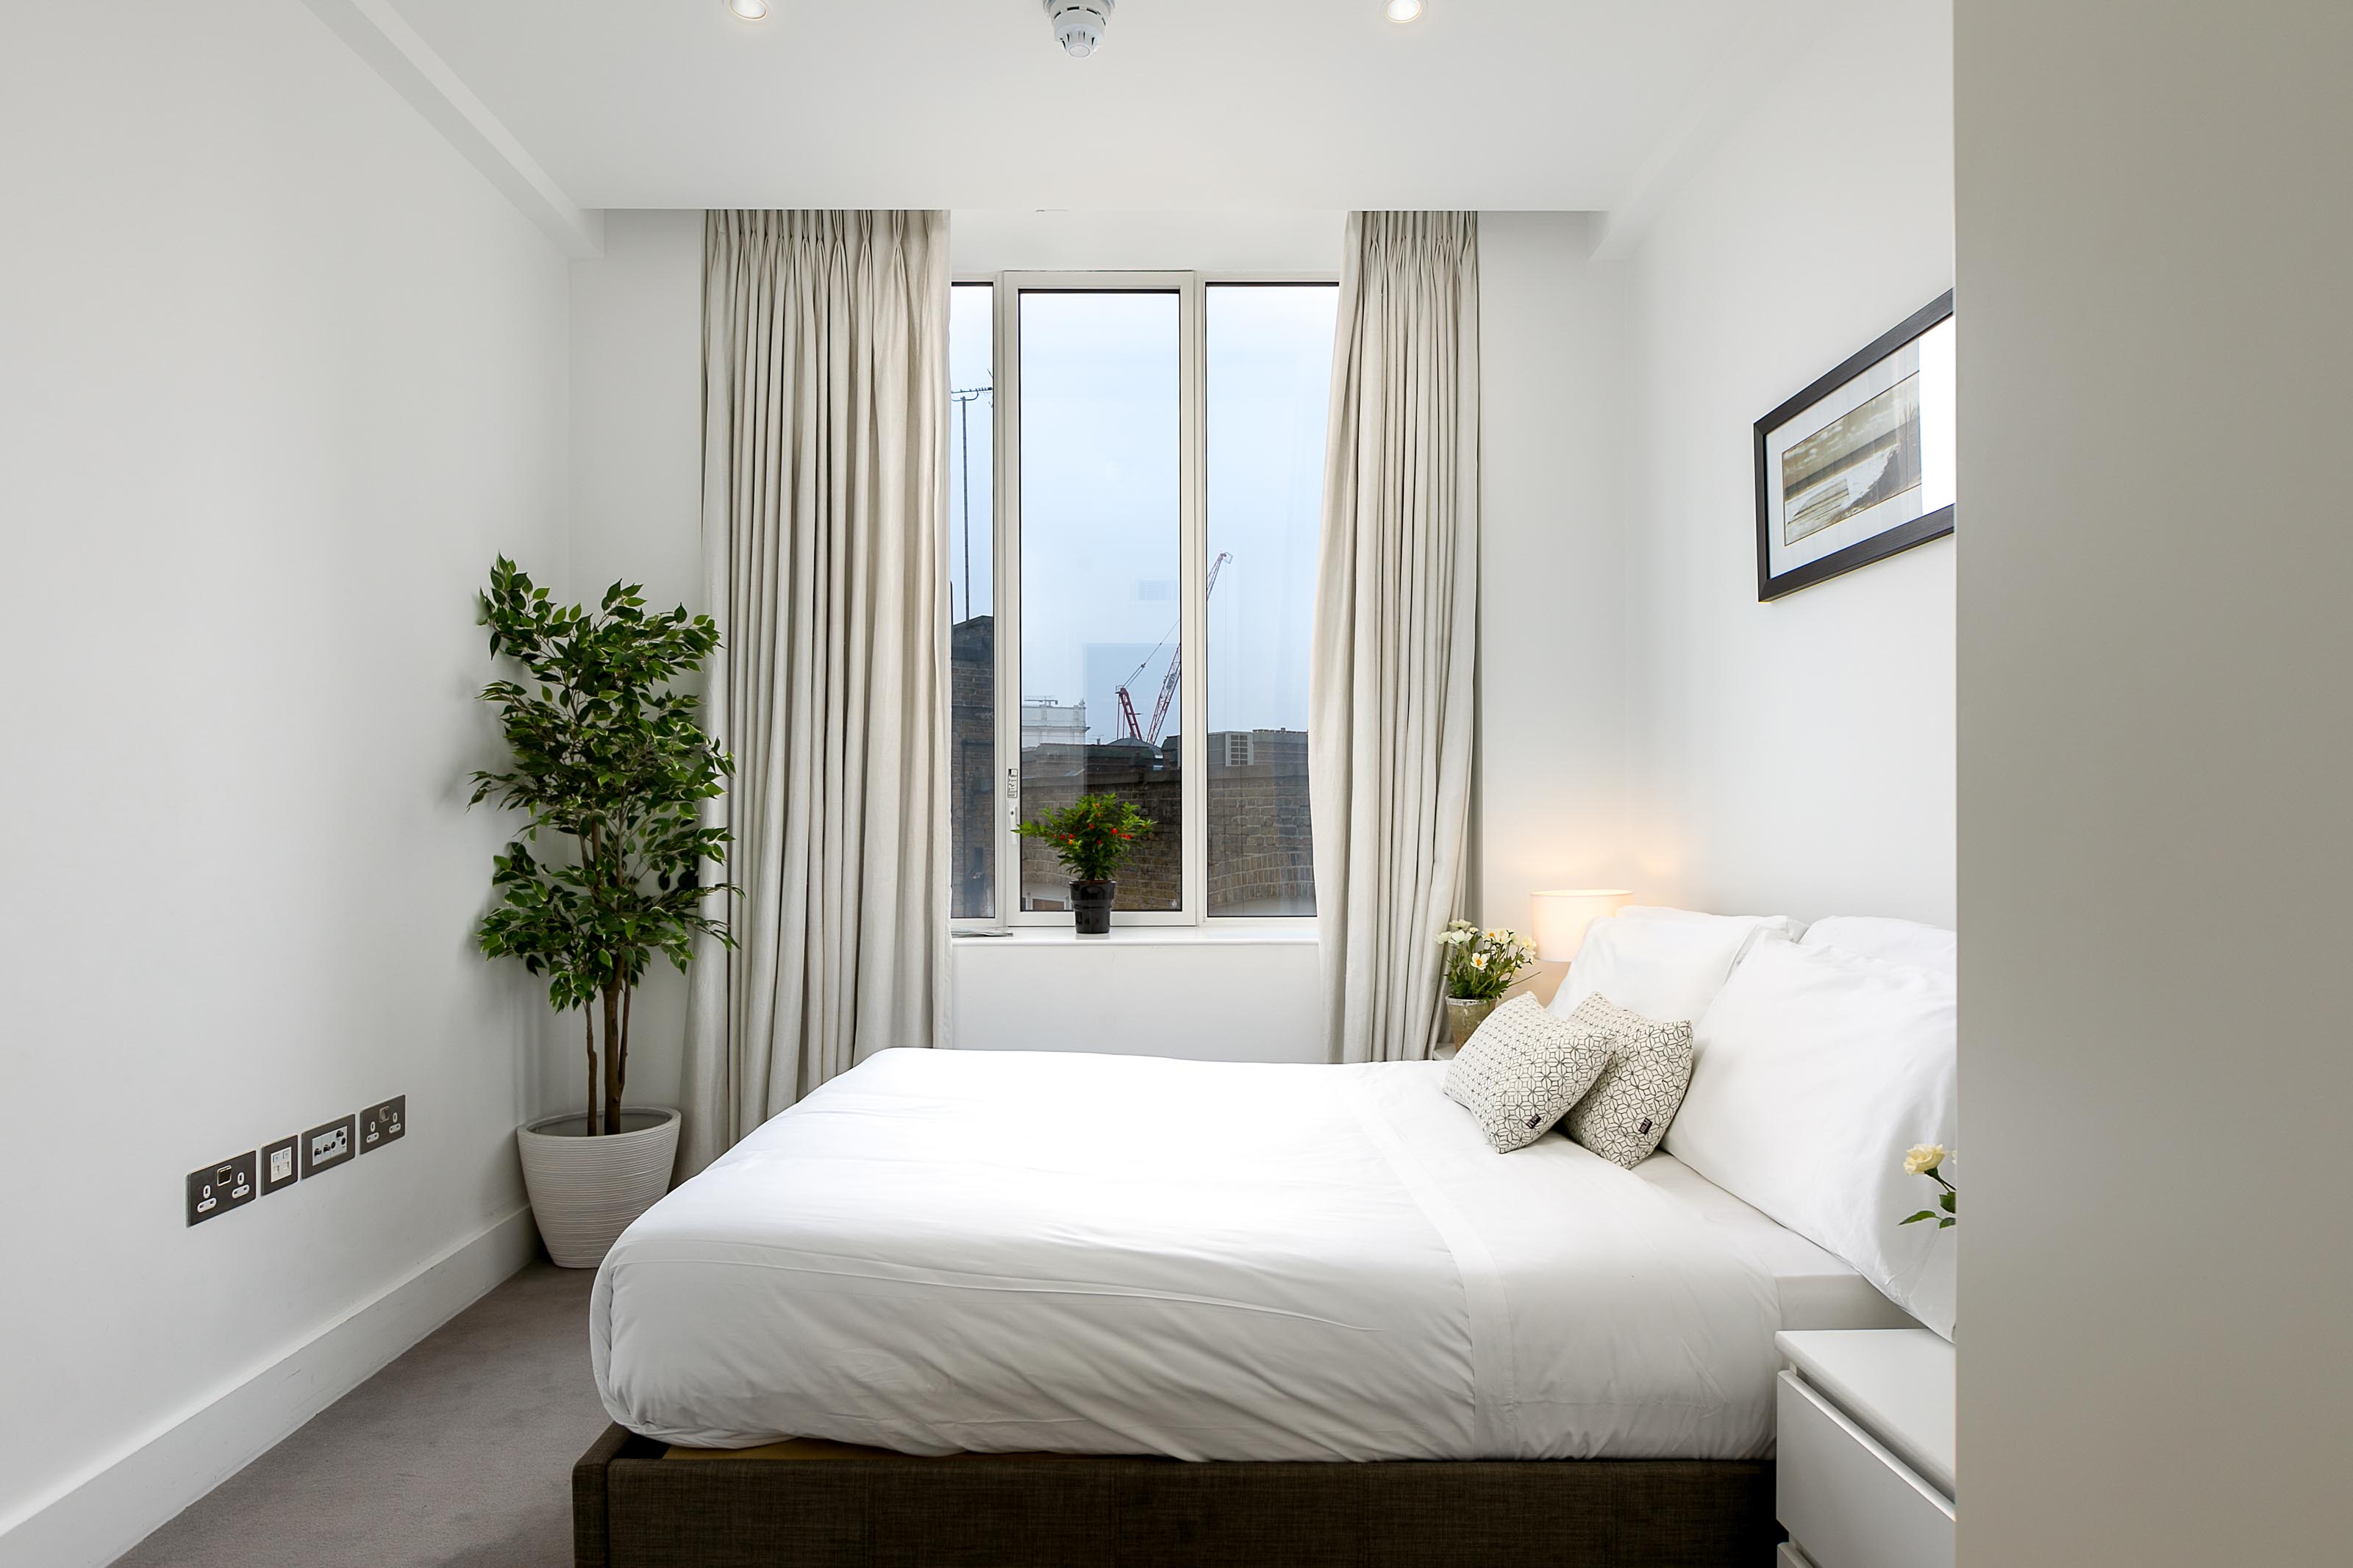 Lovelydays luxury service apartment rental - London - Covent Garden - Prince's House 506 - Lovelysuite - 2 bedrooms - 2 bathrooms - Double bed - 9a2874b309be - Lovelydays